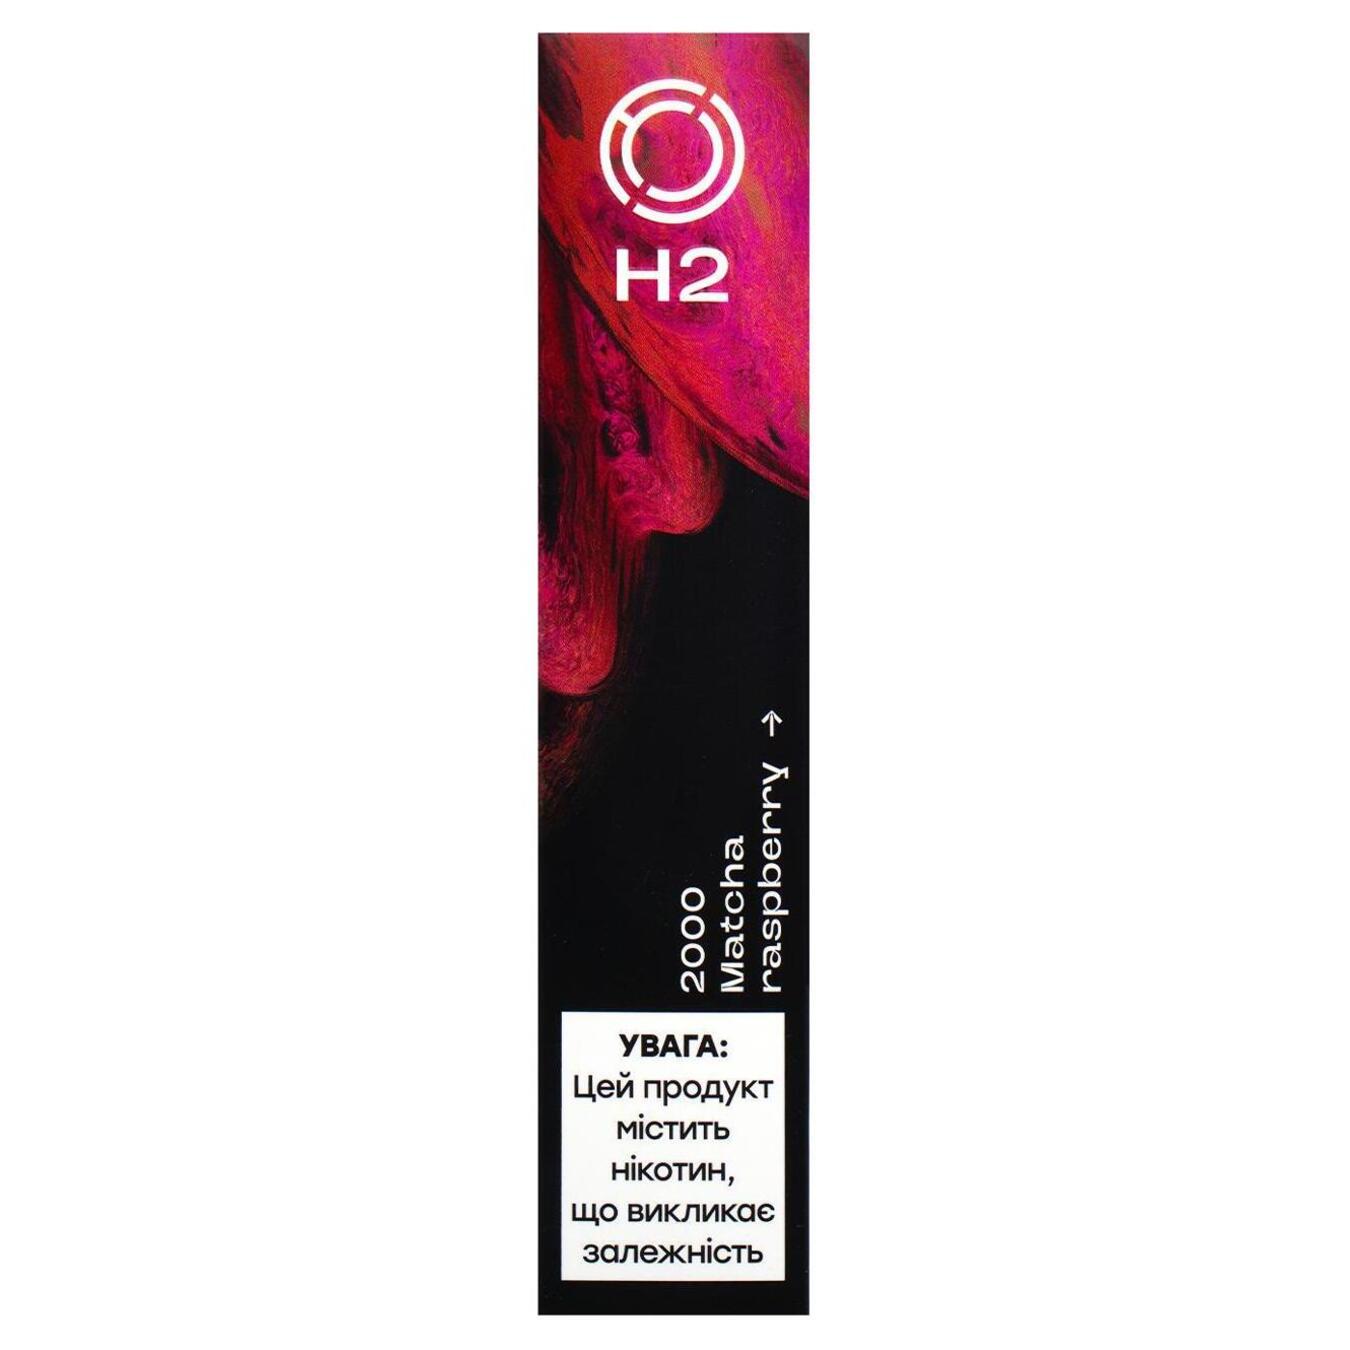 Випарювач H2 Matcha Raspberry 2000 затяжок рідини 6,5 мл нікотину 3,7% (ціна вказана без акцизу)